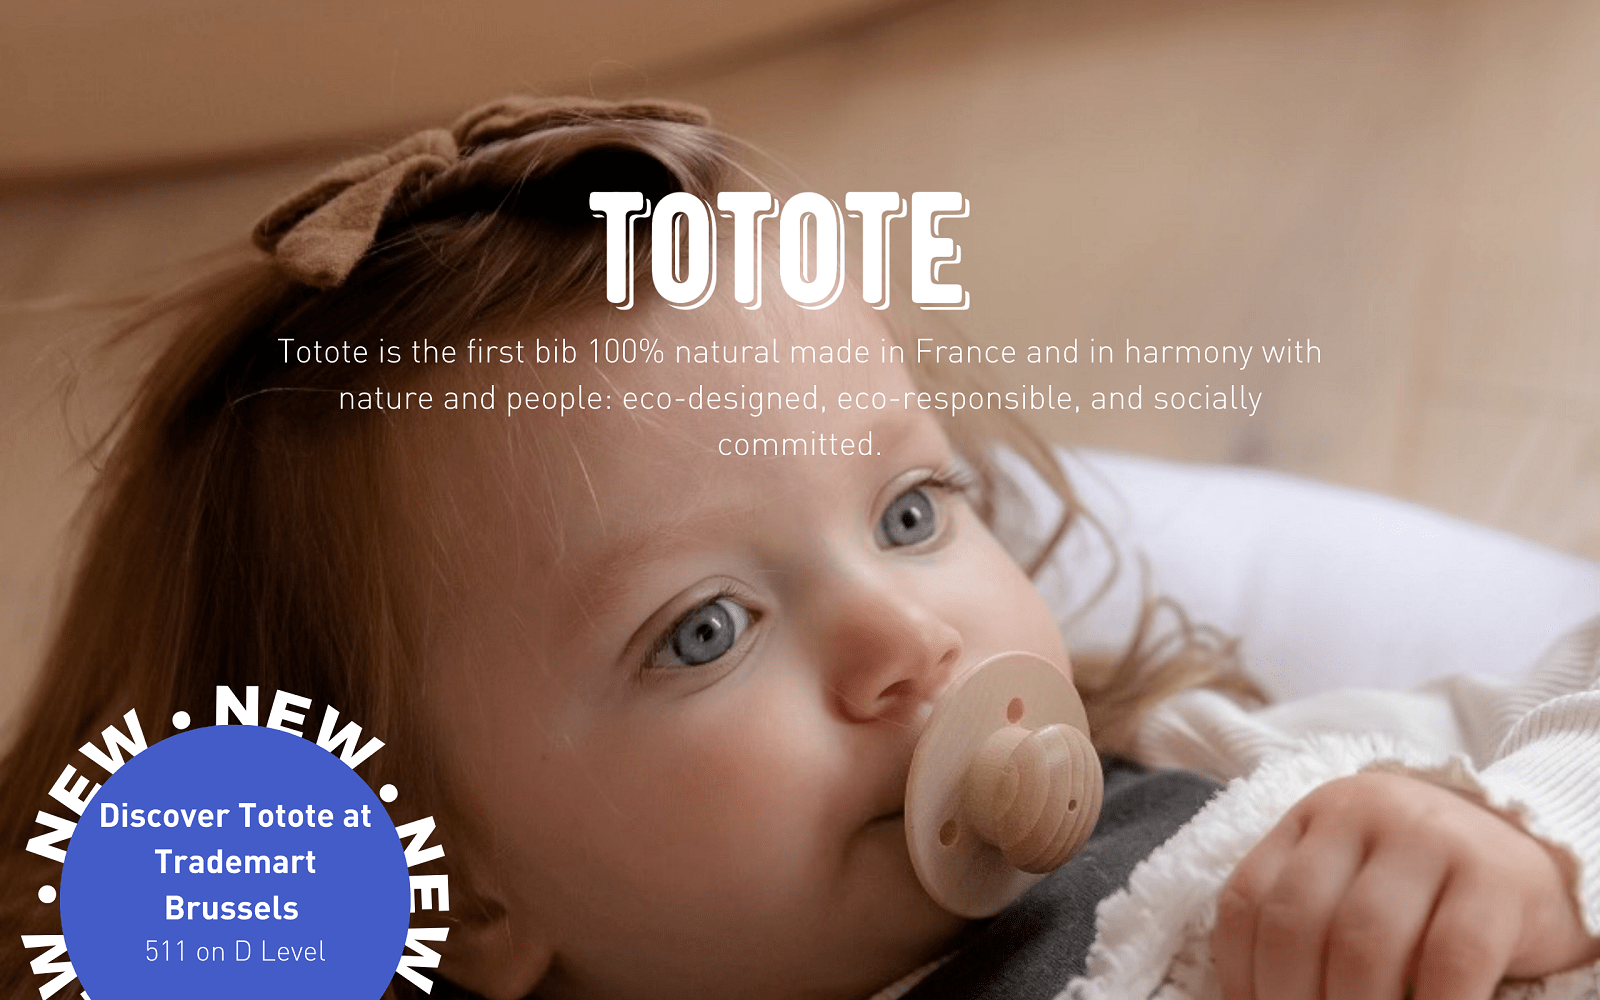 New brand Totote